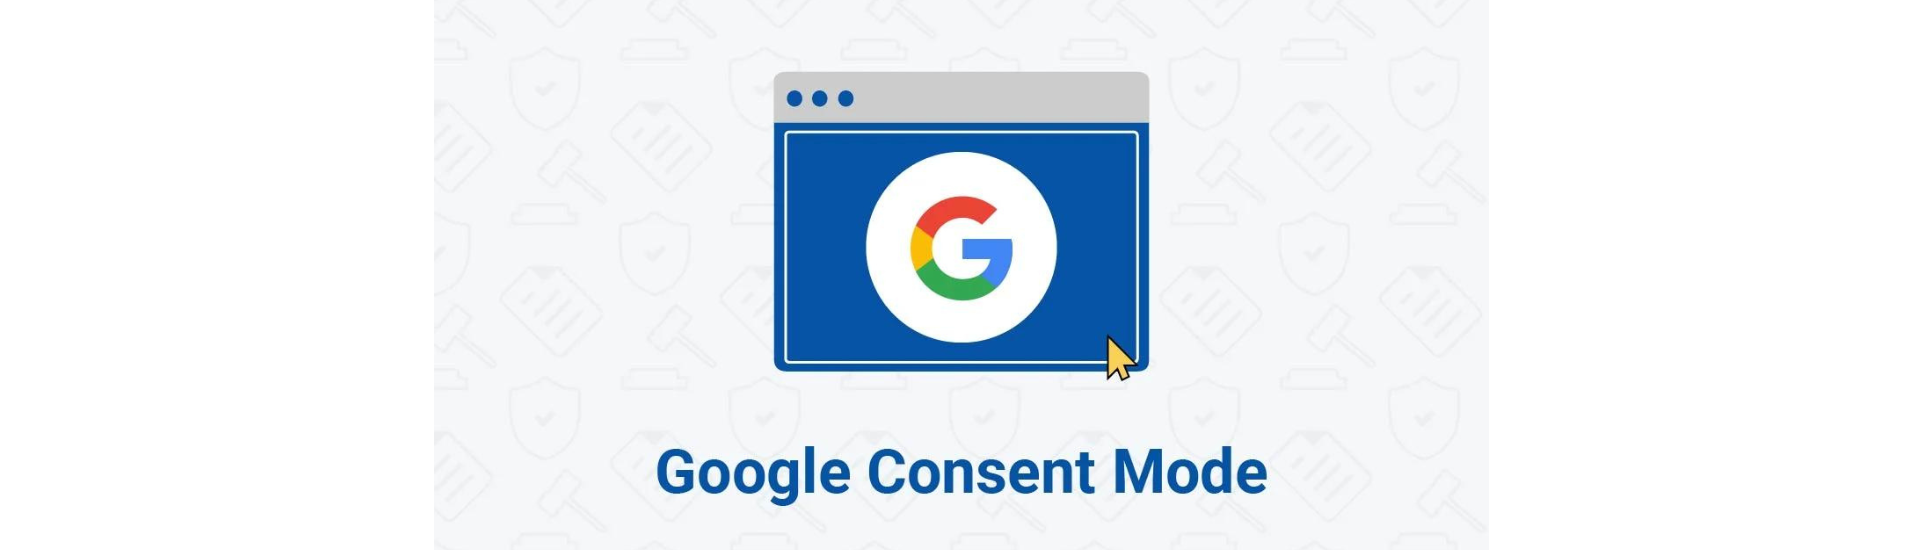 google consent mode ¿Qué es Google Consent Mode?